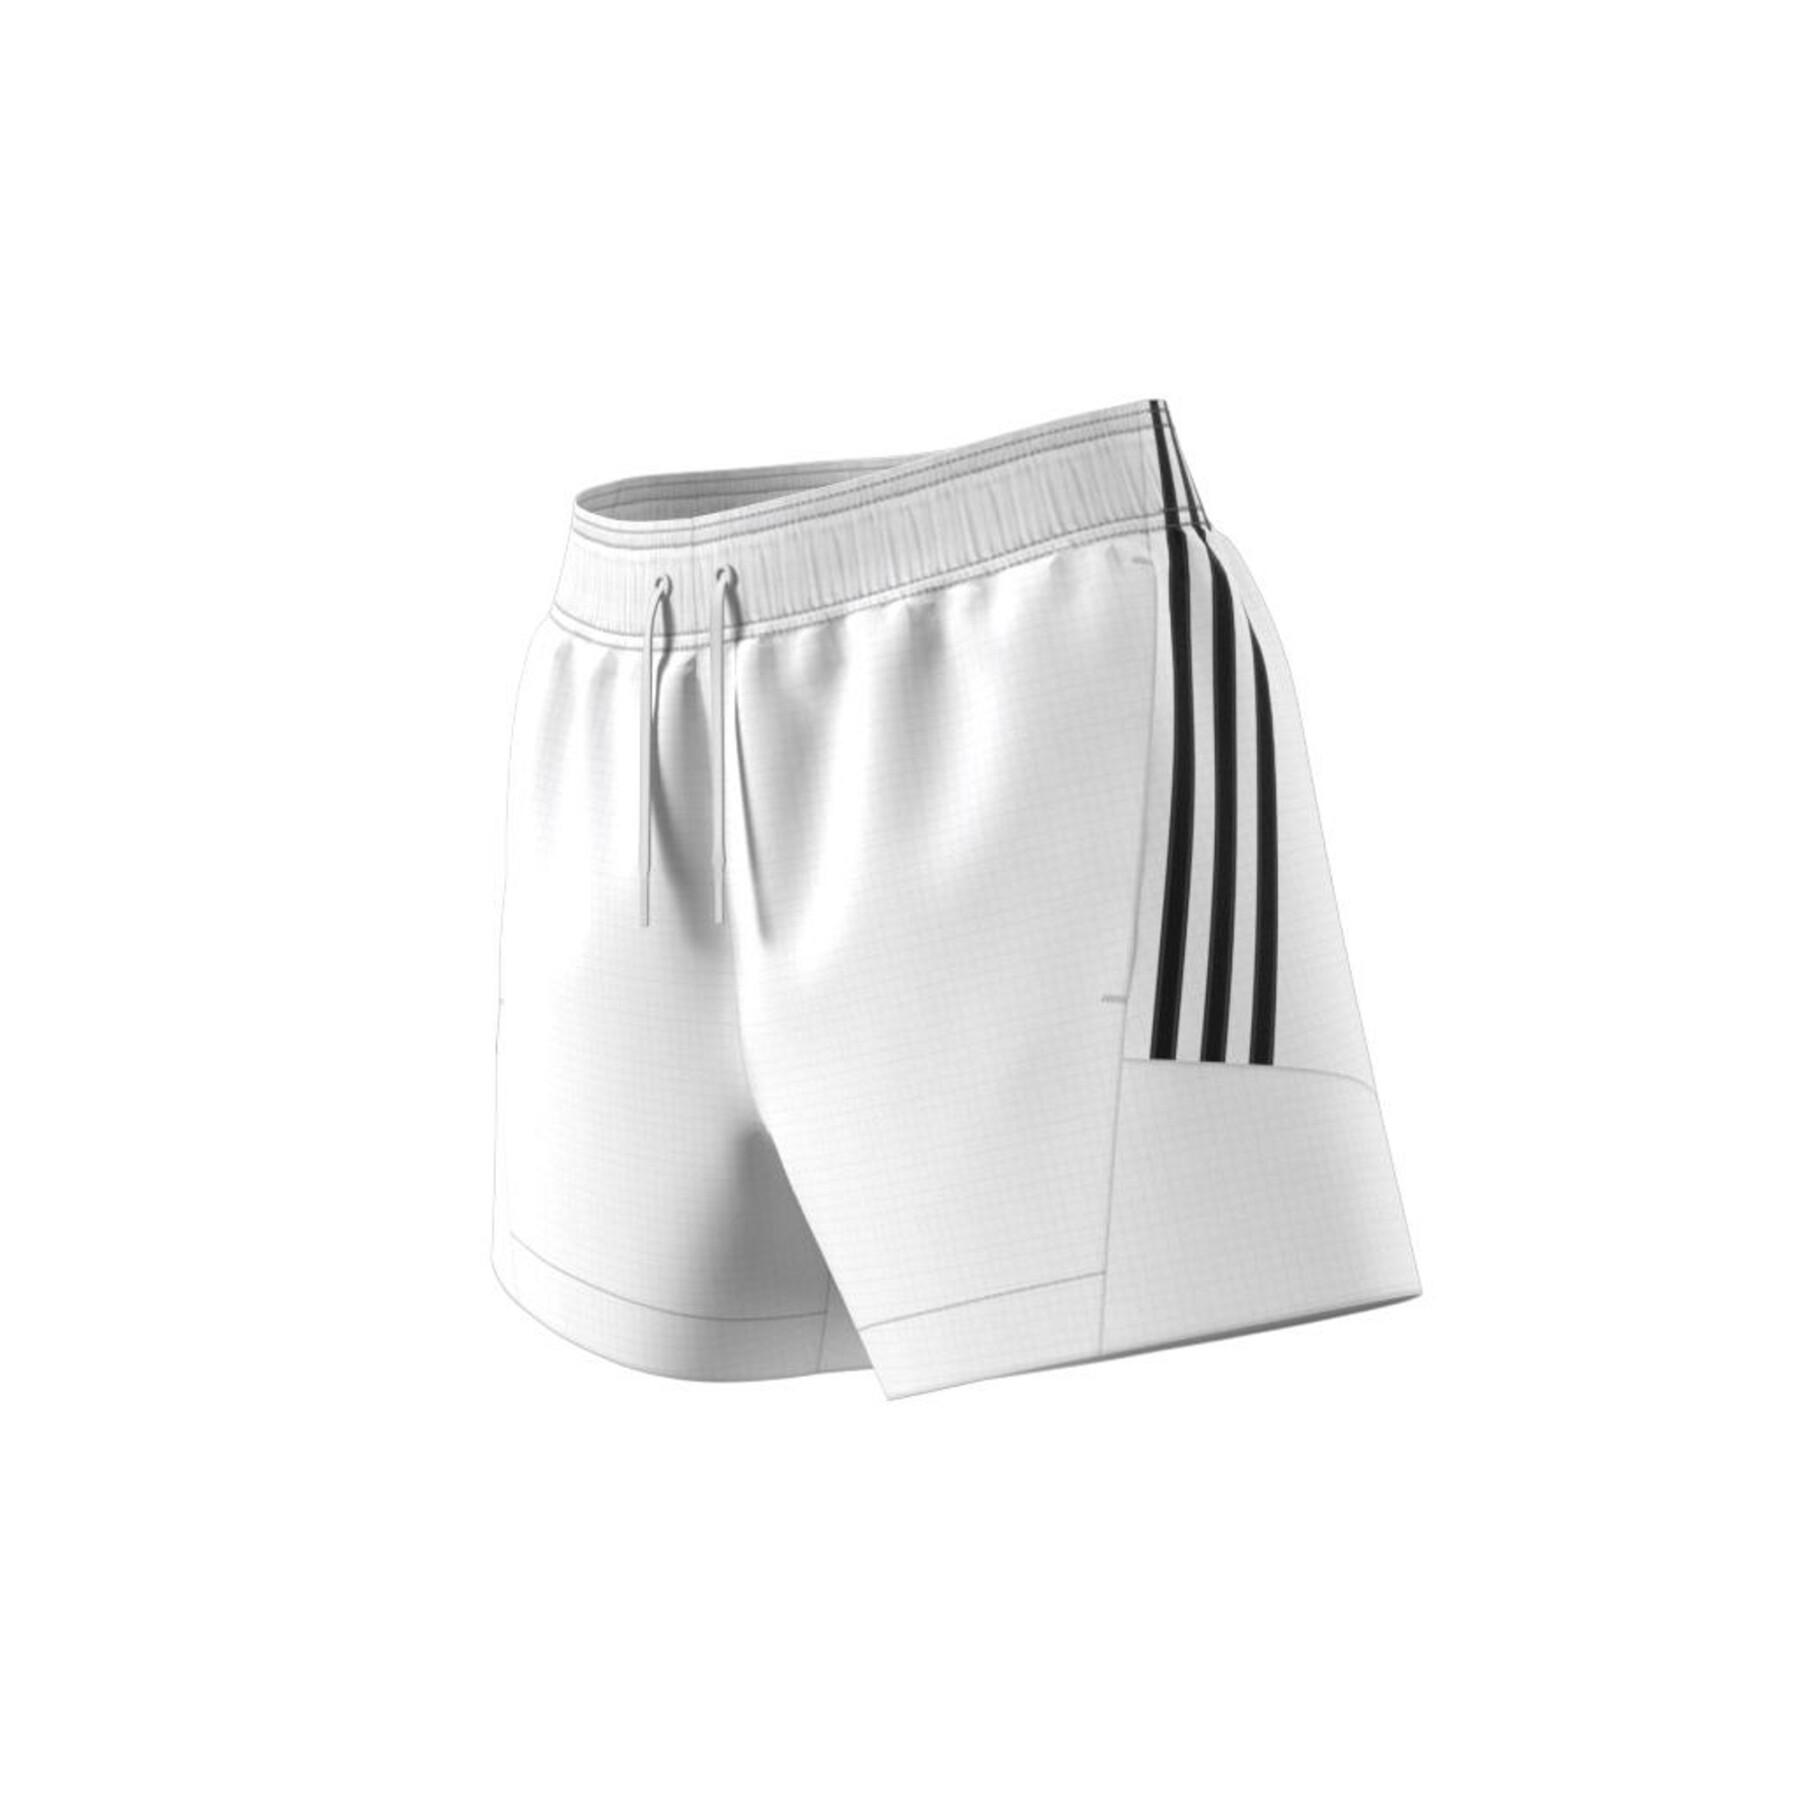 Women's shorts adidas Sportswear Future Icons